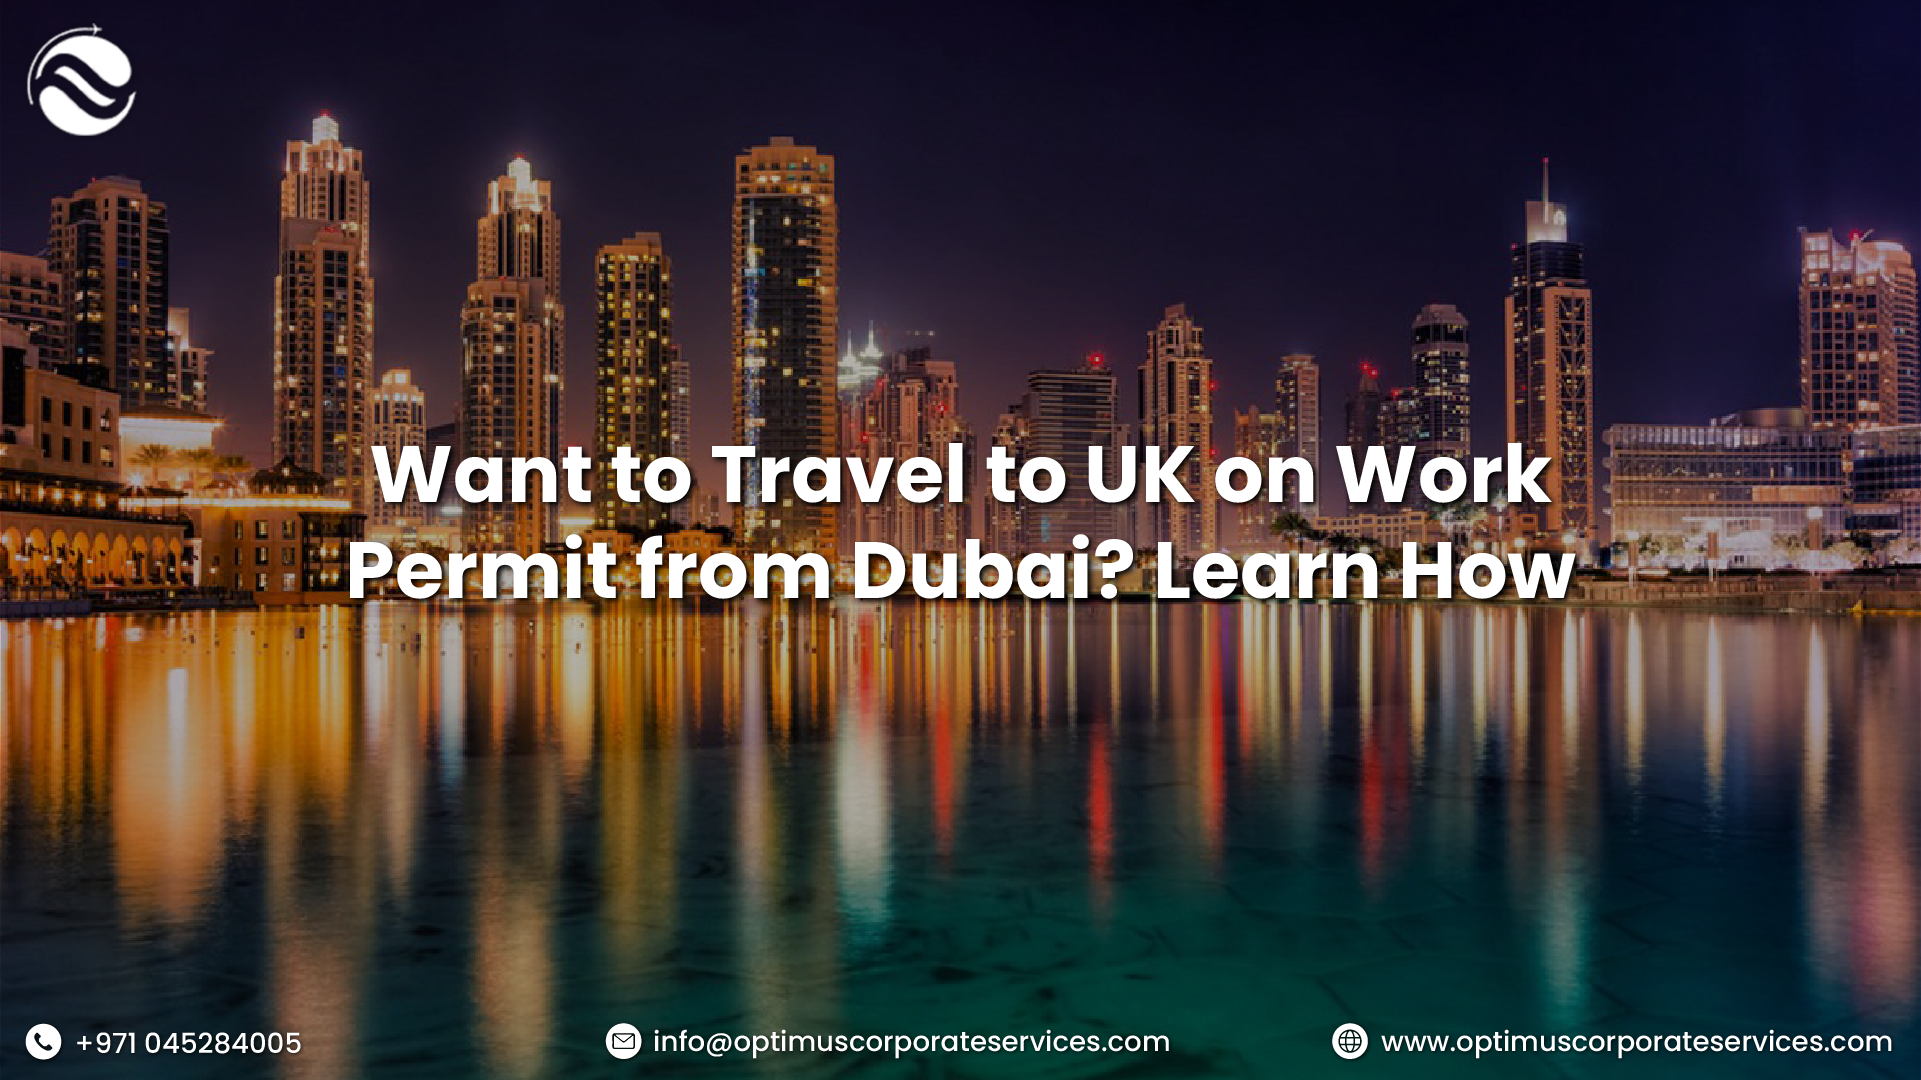 UK work permit from Dubai